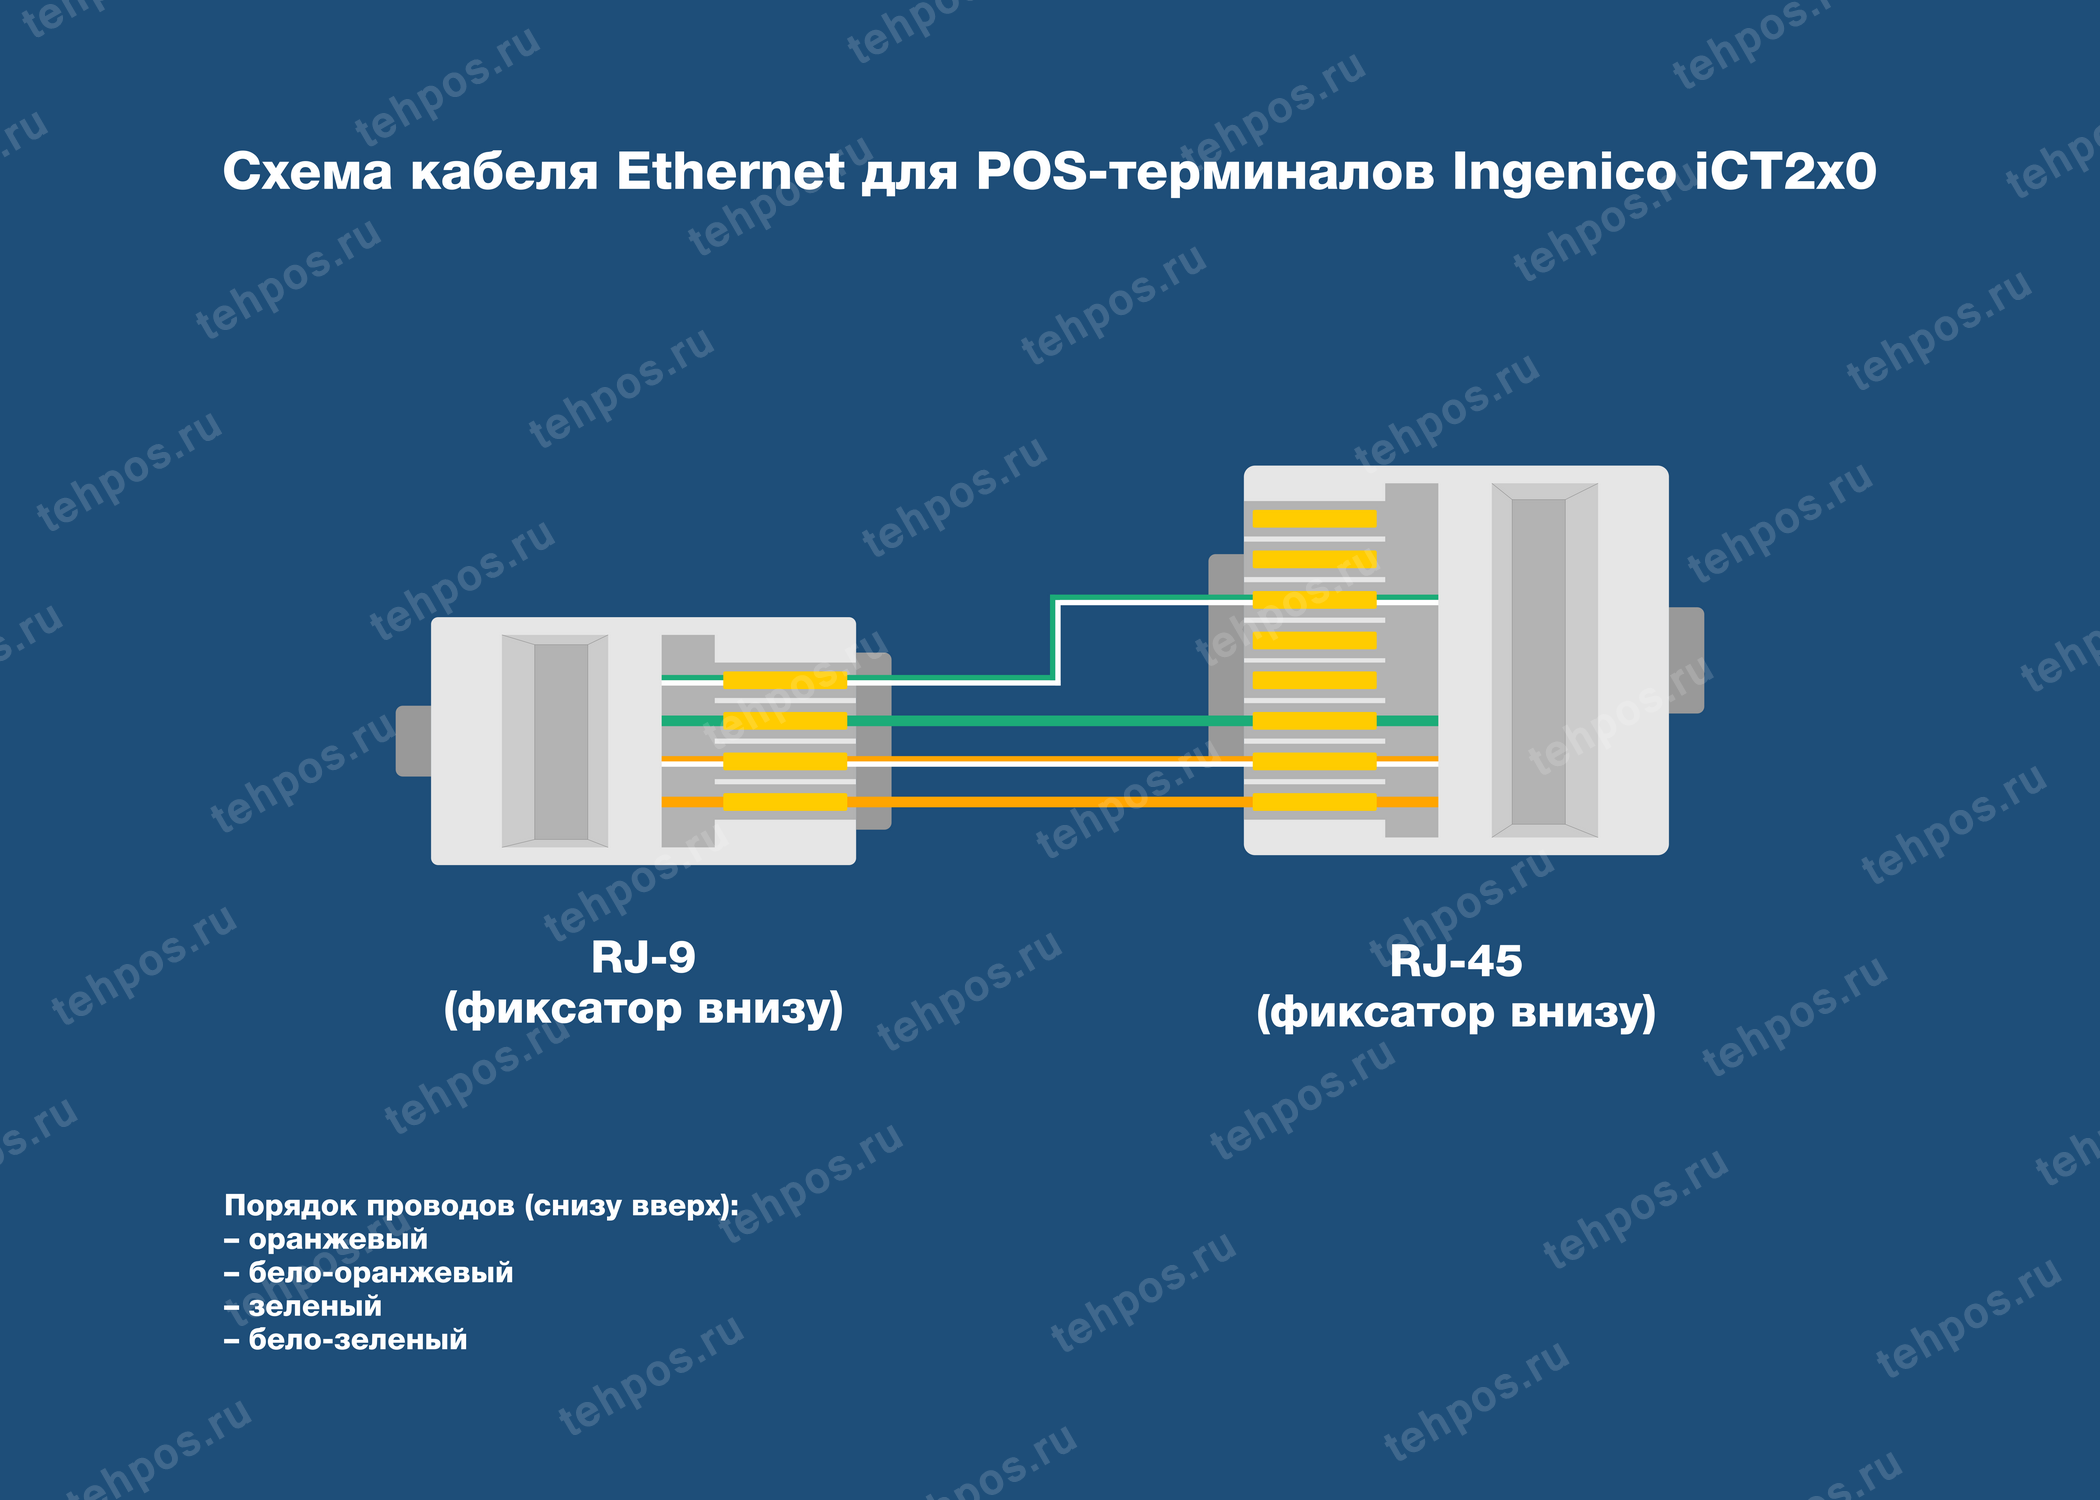 Схема кабеля Ethernet для Ingenico iCT220/250